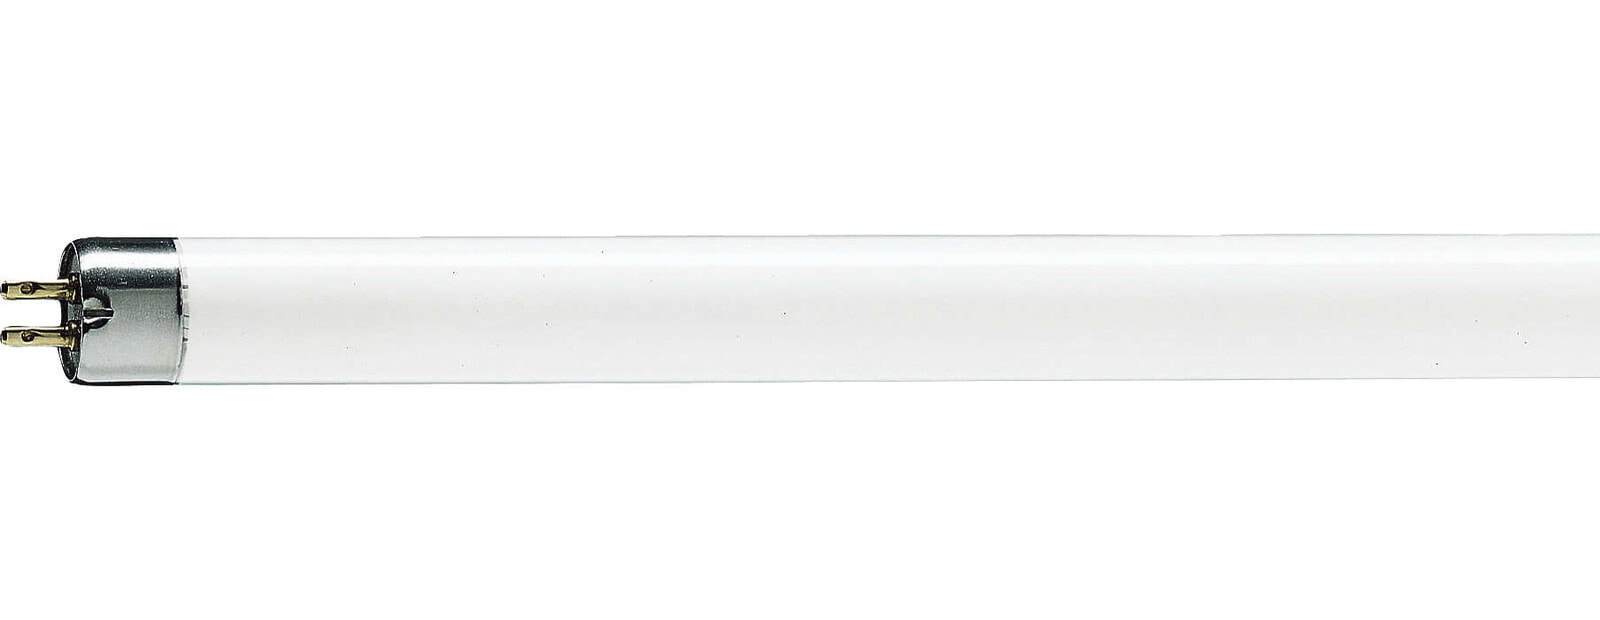 Philips MASTER TL Mini Super 80 люминисцентная лампа 7,1 W G5 Теплый белый A 71638527